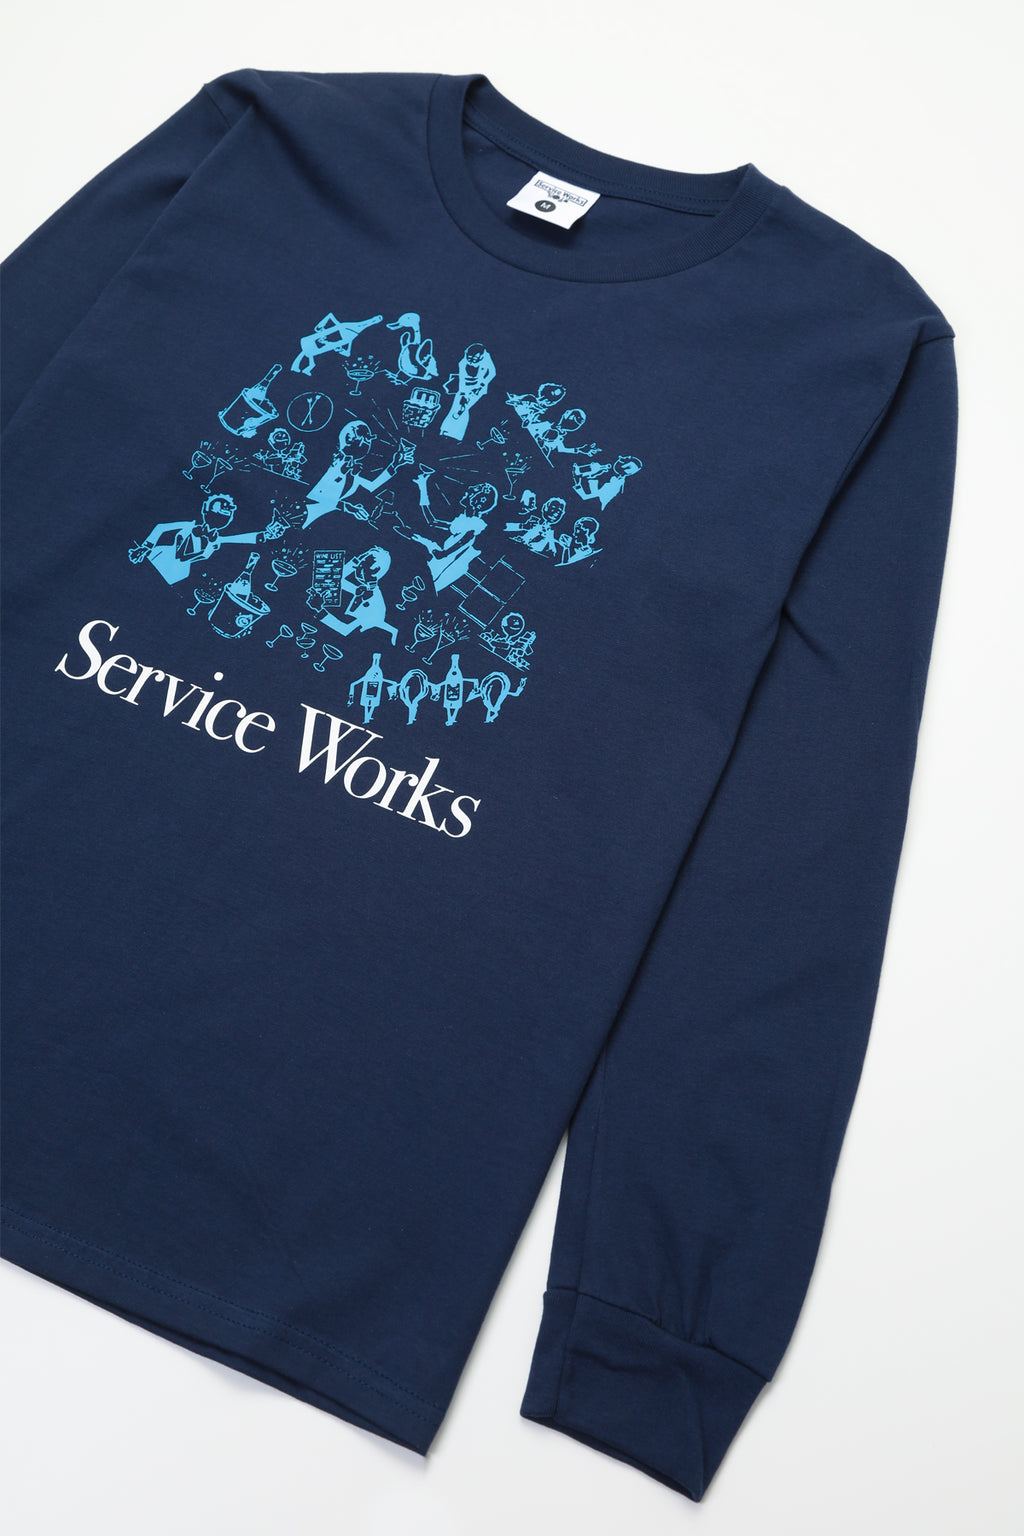 Service Works - Soiree Long Sleeve Tee - Navy